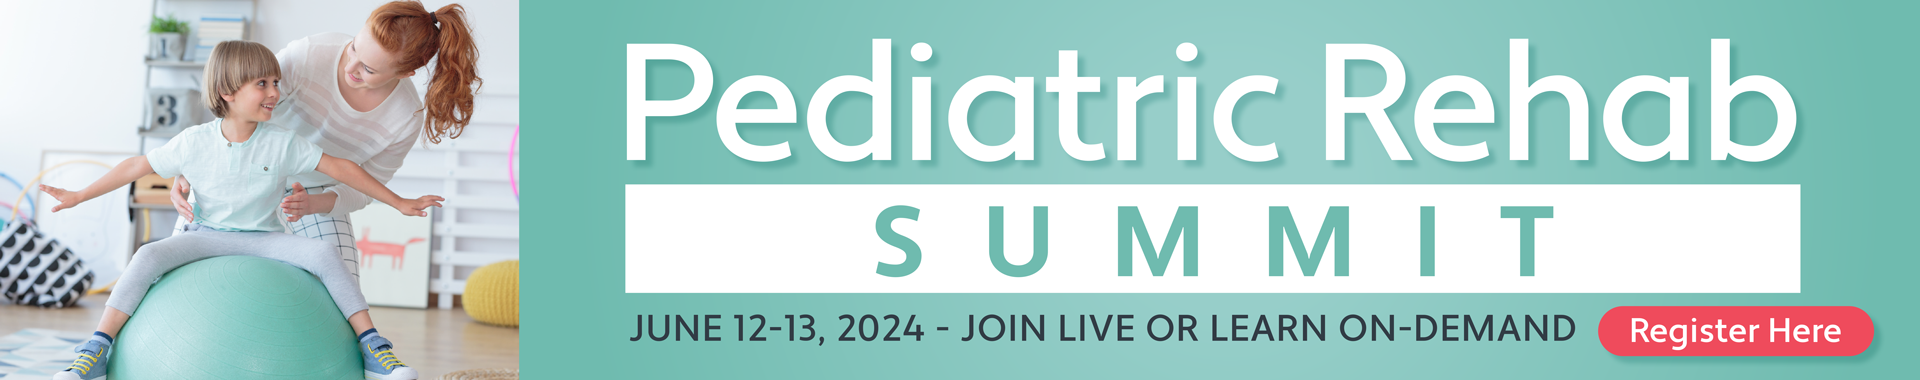 Pediatric Rehab Summit